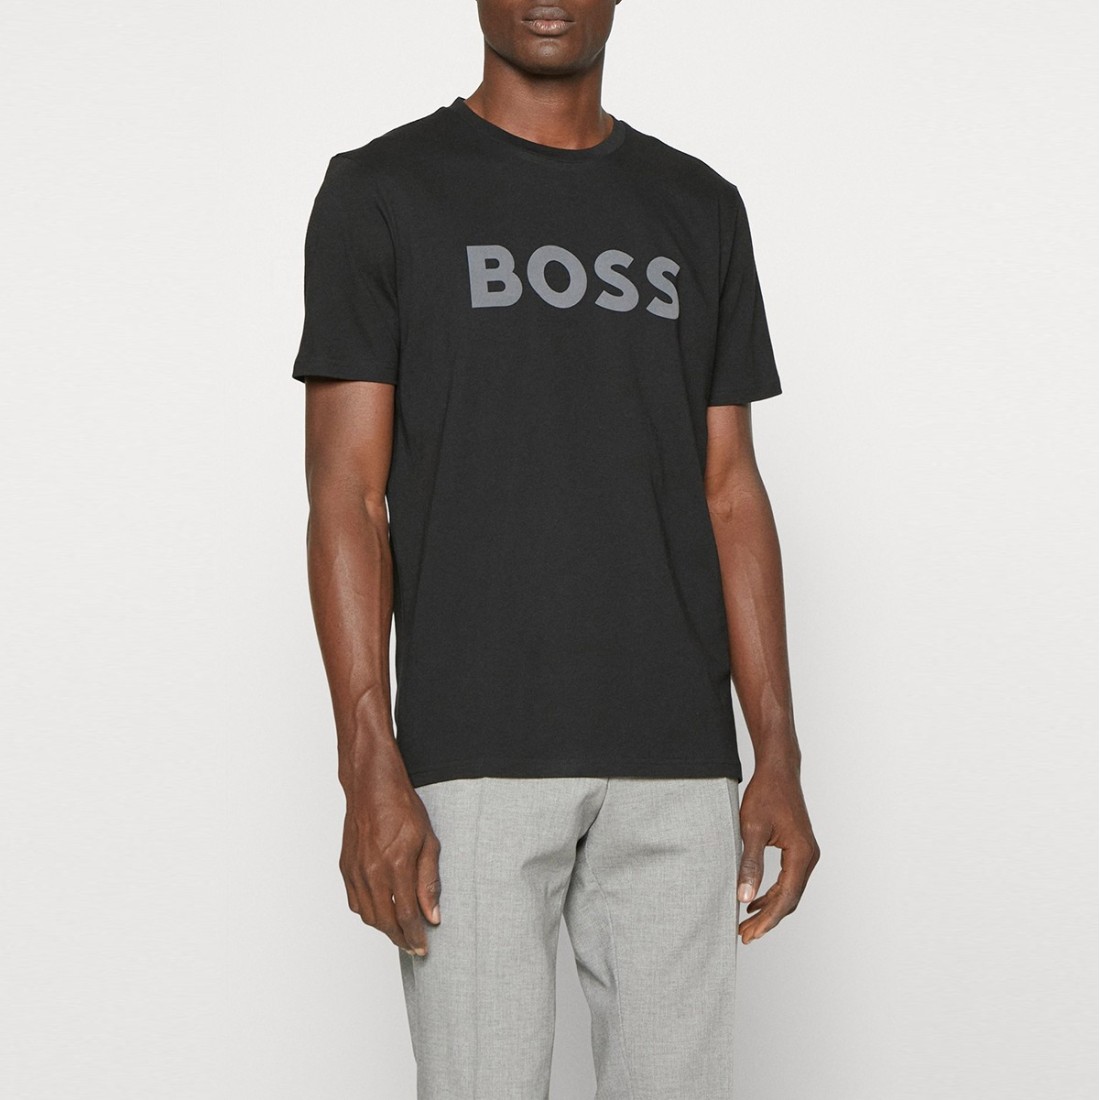 Image of BOSS - T-shirt Thinking - Colore: Nero,Taglia: M